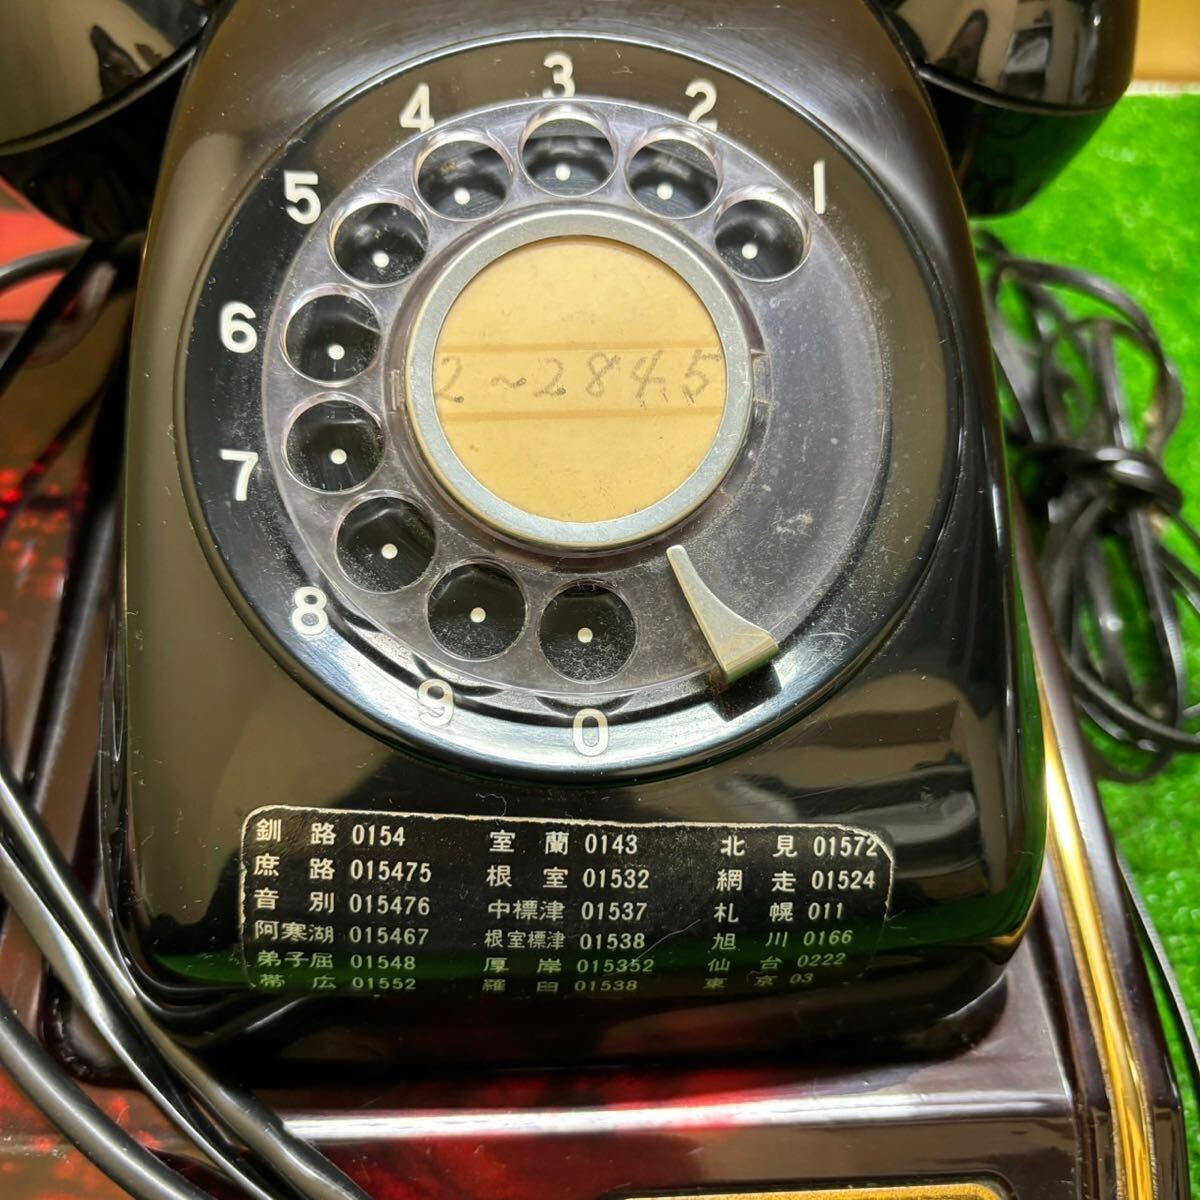  black telephone antique retro Showa Retro dial type that time thing telephone machine 